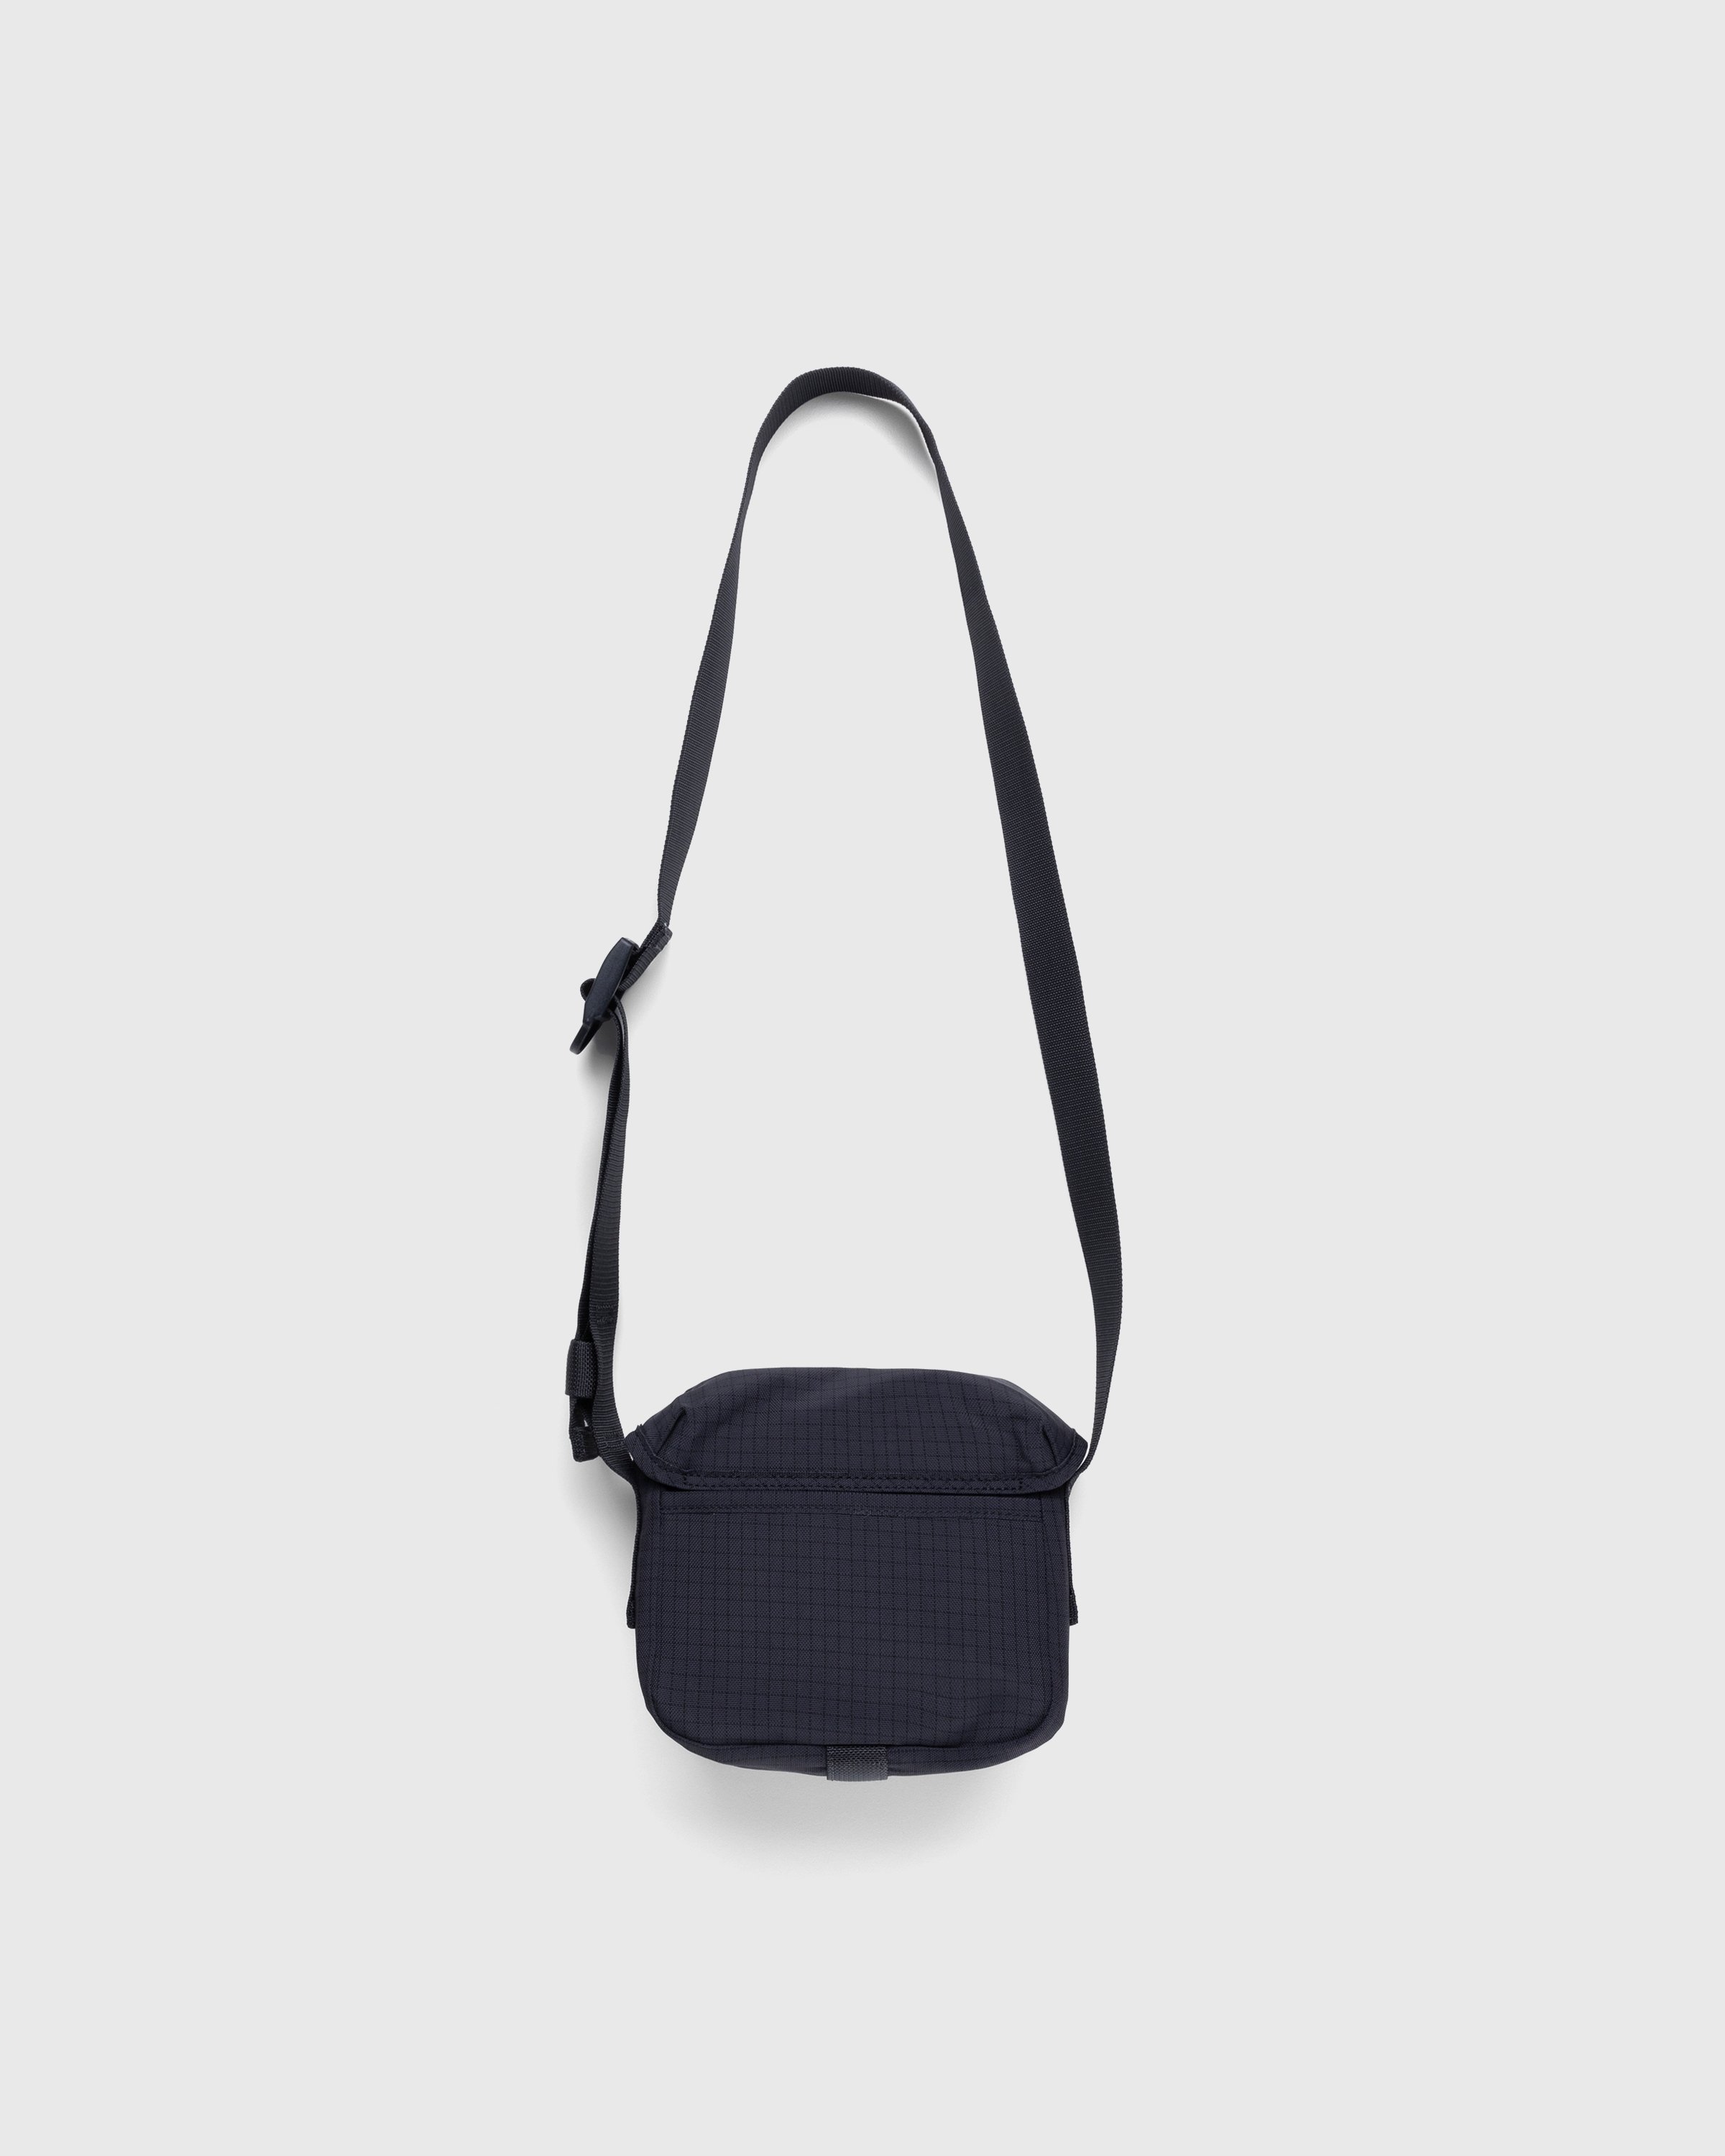 Acne Studios - Mini Messenger Bag Black - Accessories - Black - Image 2